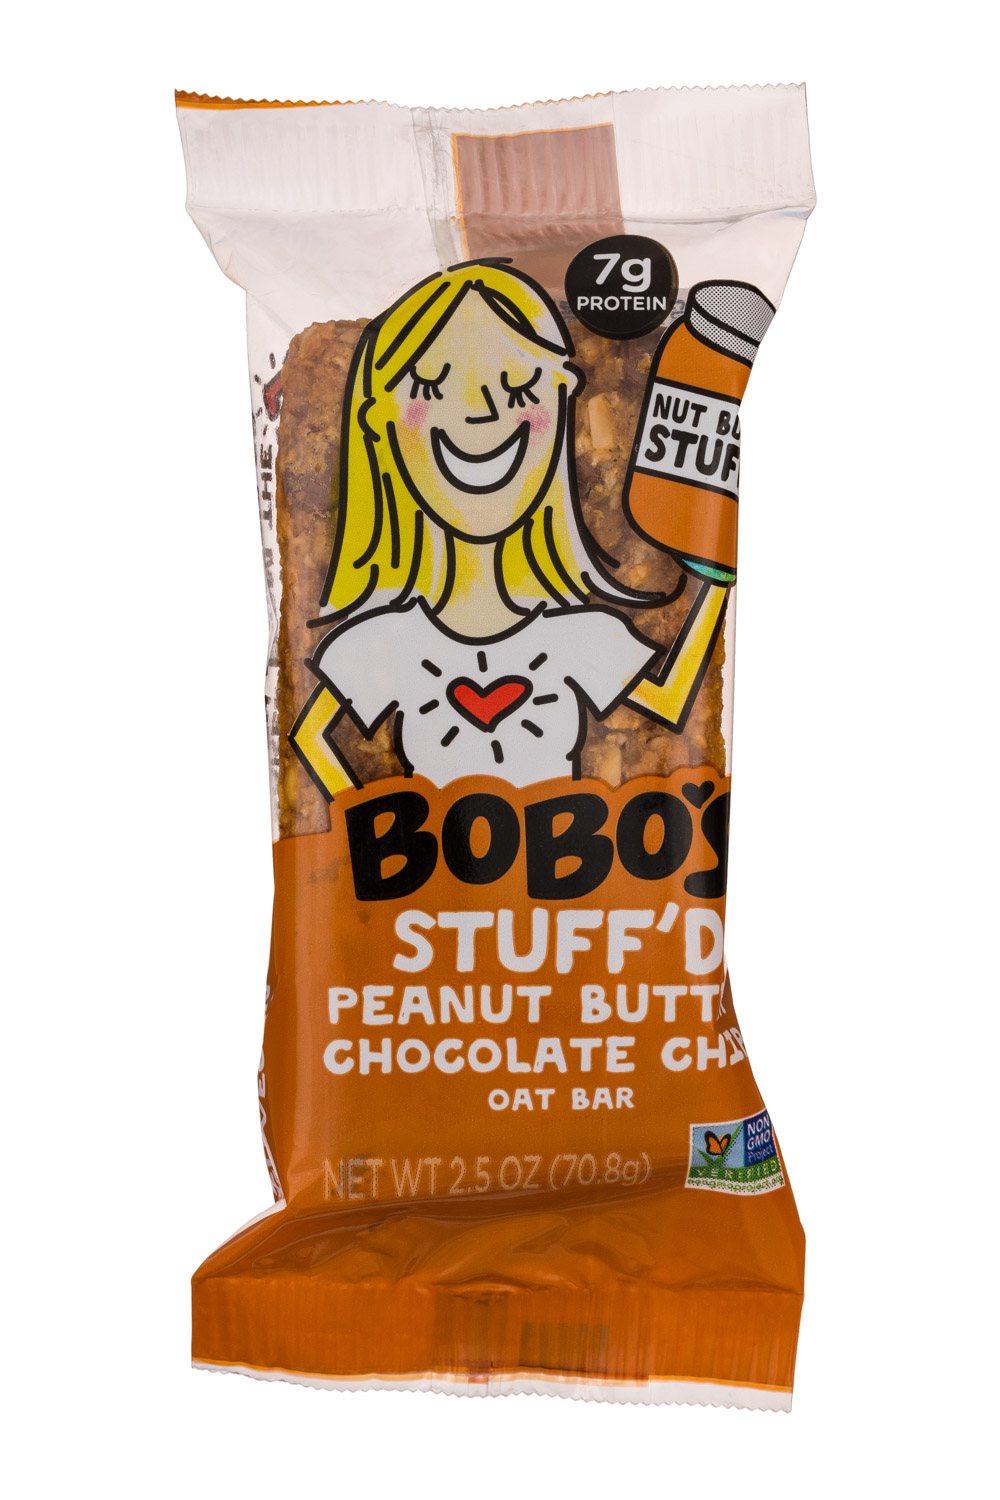 Stuff'd Peanut Butter Chocolate Chip